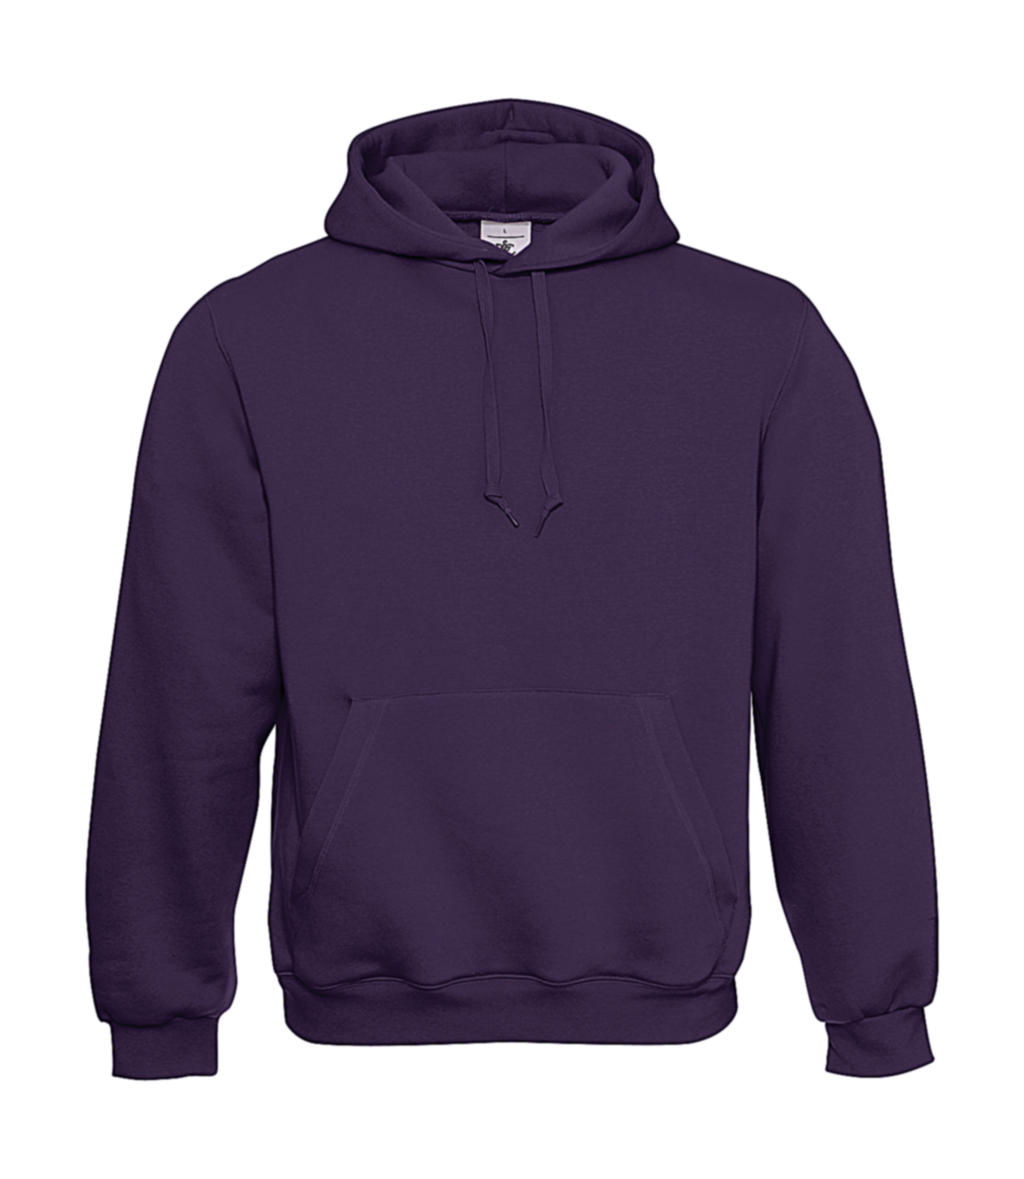  Hooded Sweatshirt in Farbe Urban Purple